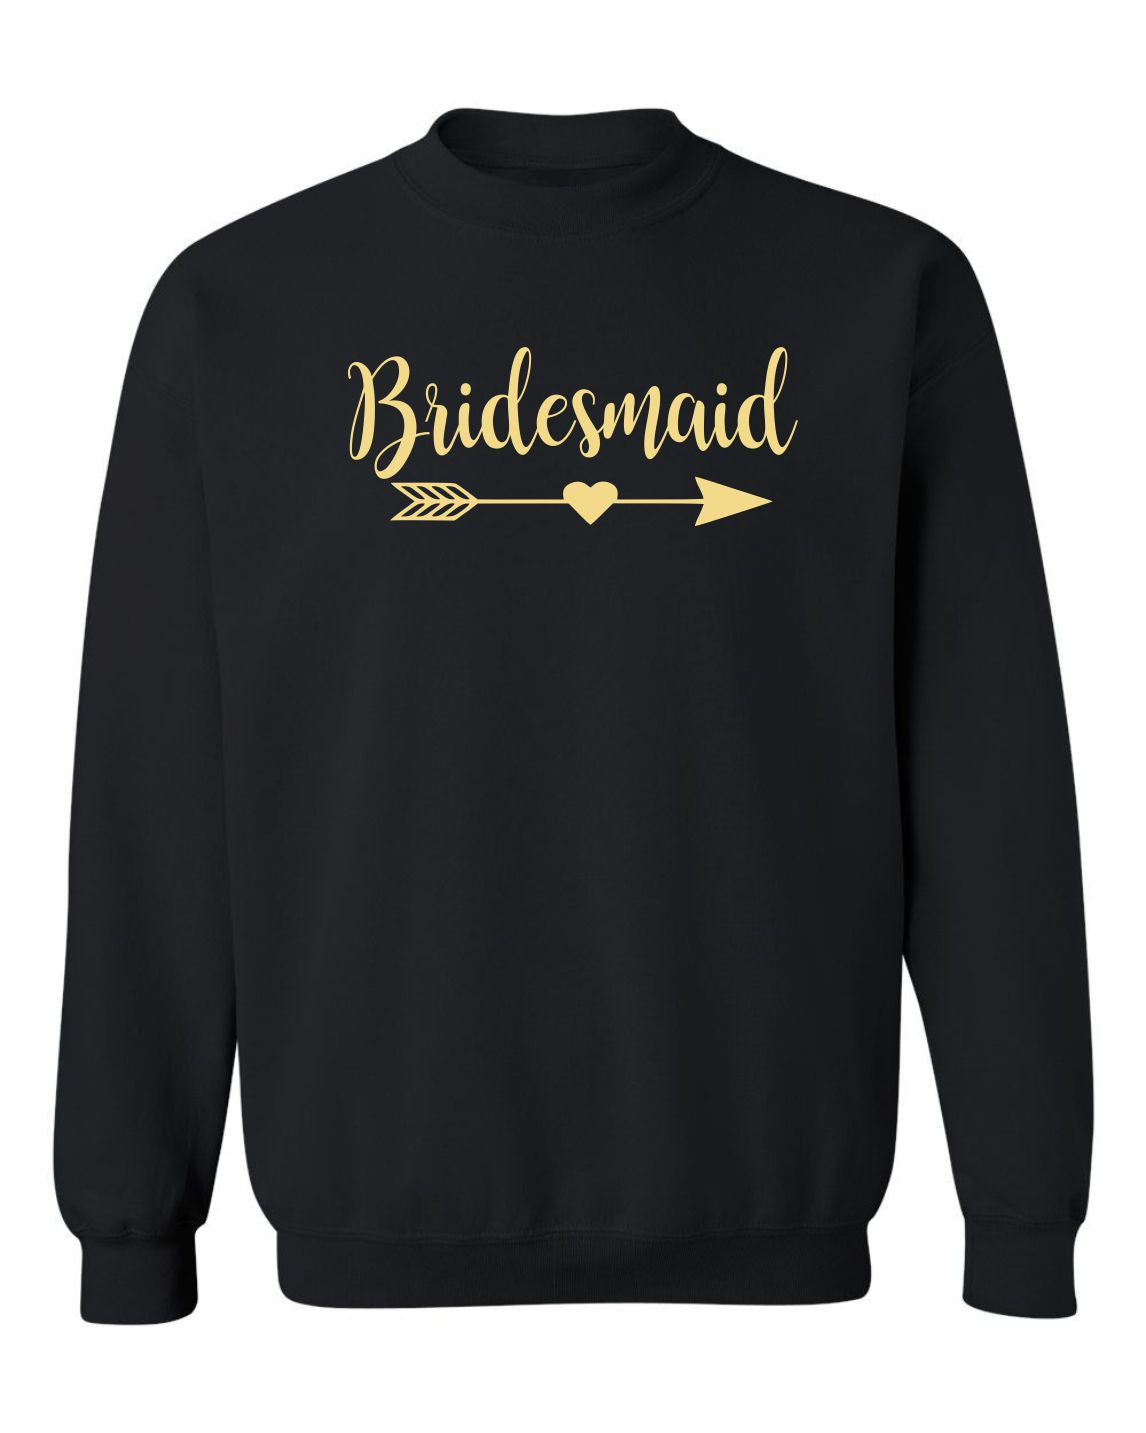 "Bridesmaid" (Arrow Heart Design) Unisex Crewneck